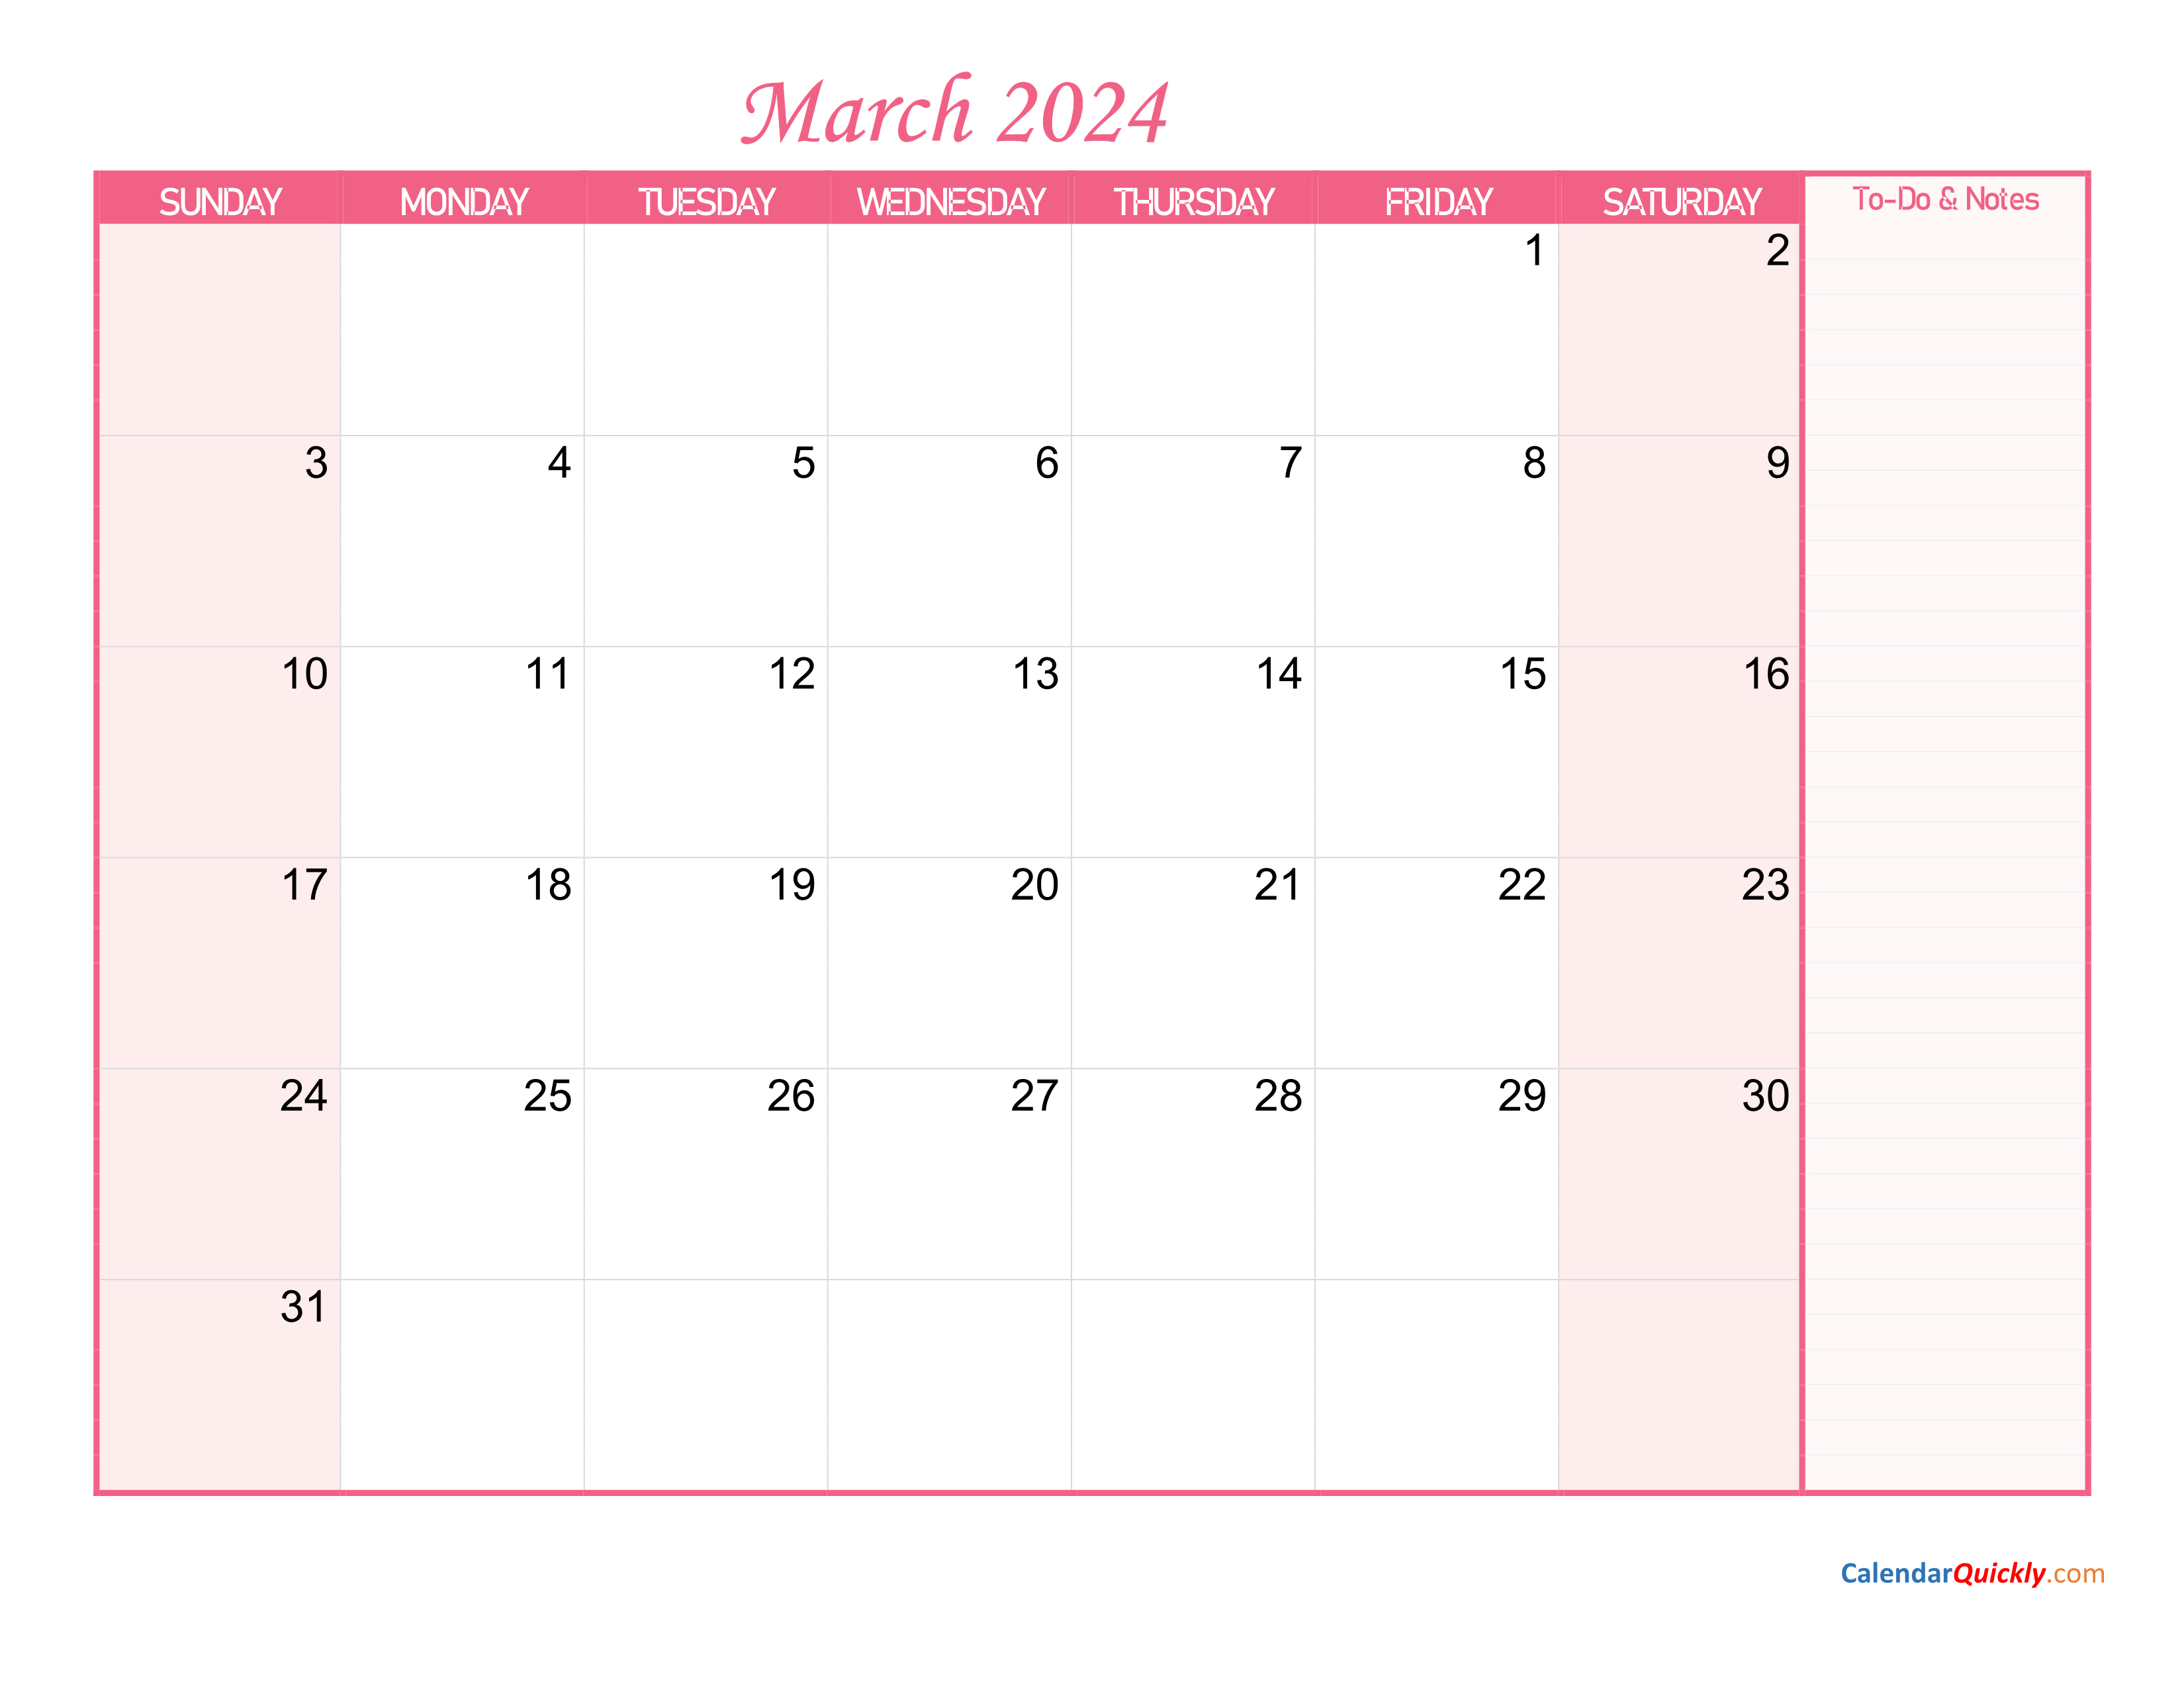 march-calendar-2024-with-notes-calendar-quickly